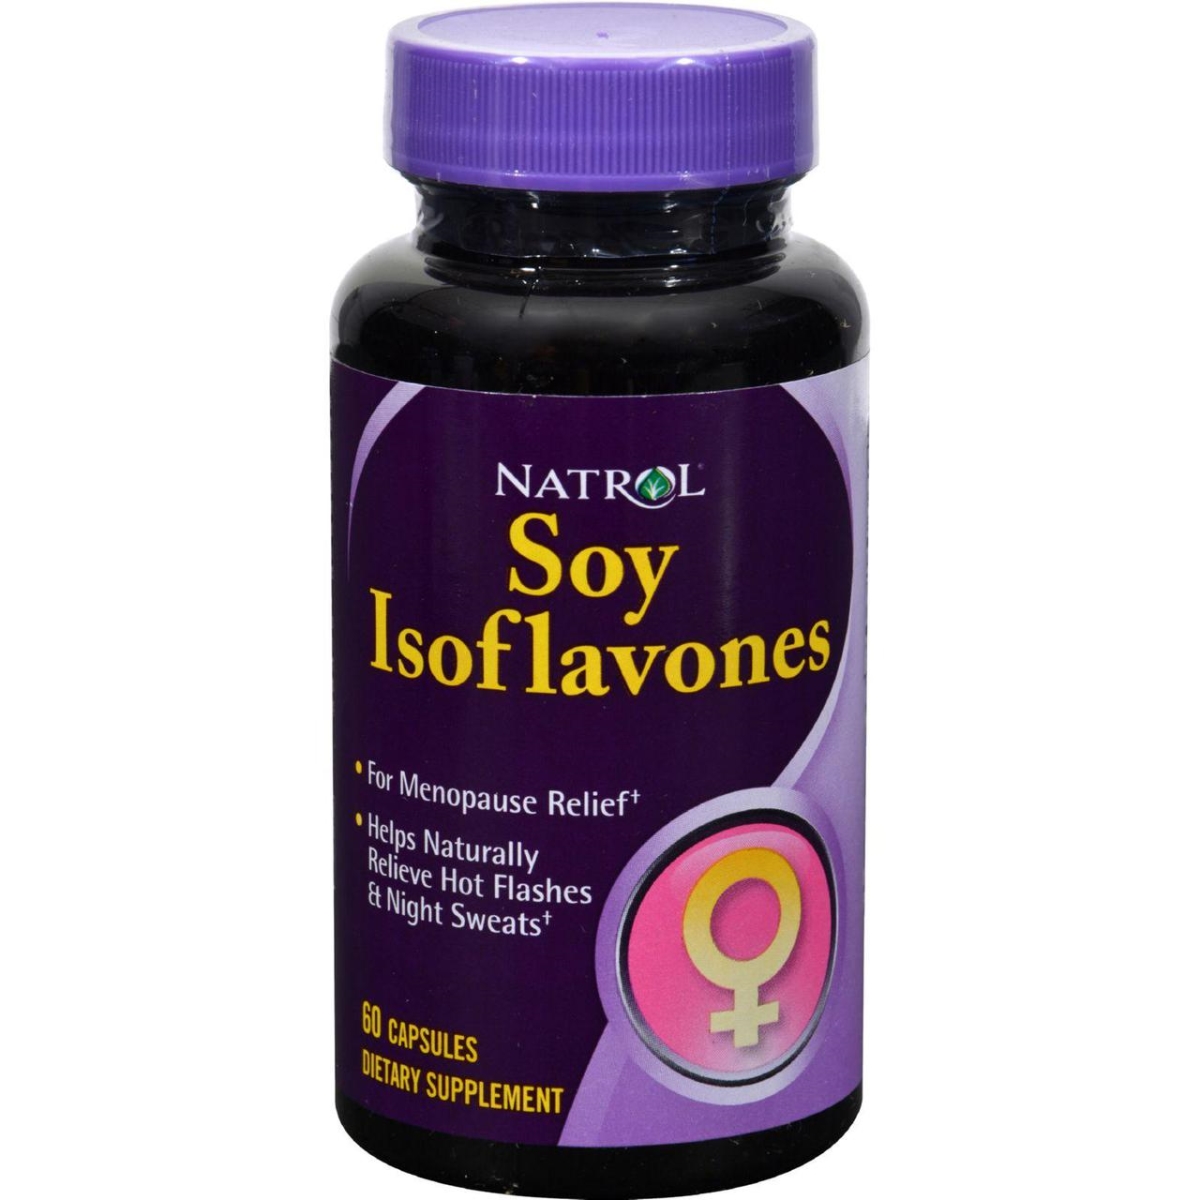 Hg0636126 Soy Isoflavones - 60 Capsules